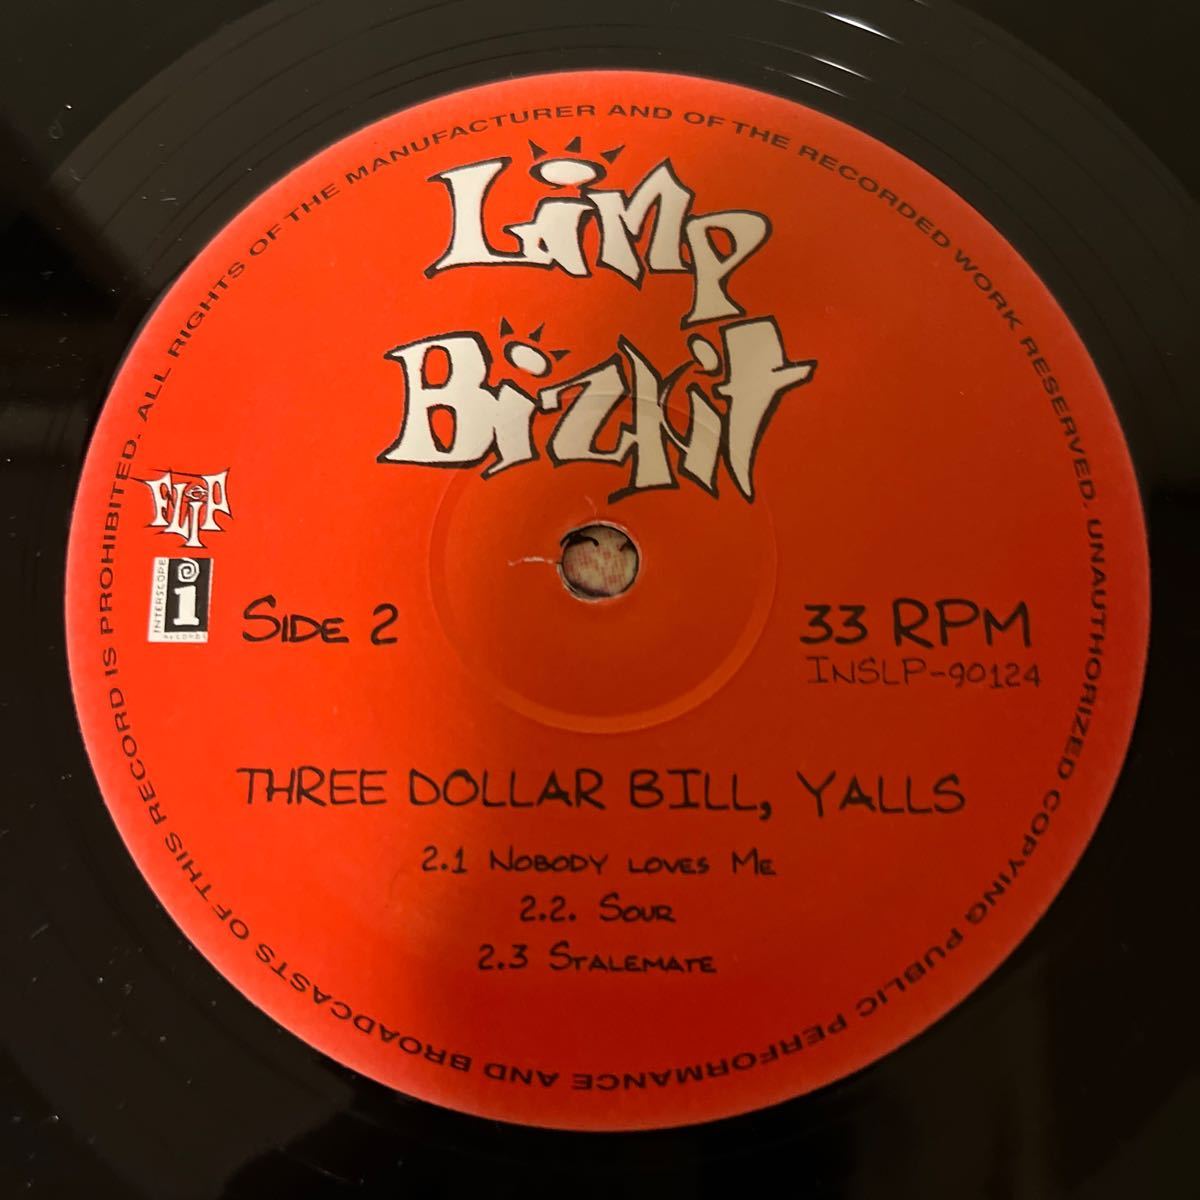 【LP】USオリジナル盤 LIMP BIZKIT / THREE DOLLAR BILL,YALL$ / 2LP / INSLP-90124 検) リンプ・ビズキット ミクスチャー_画像4